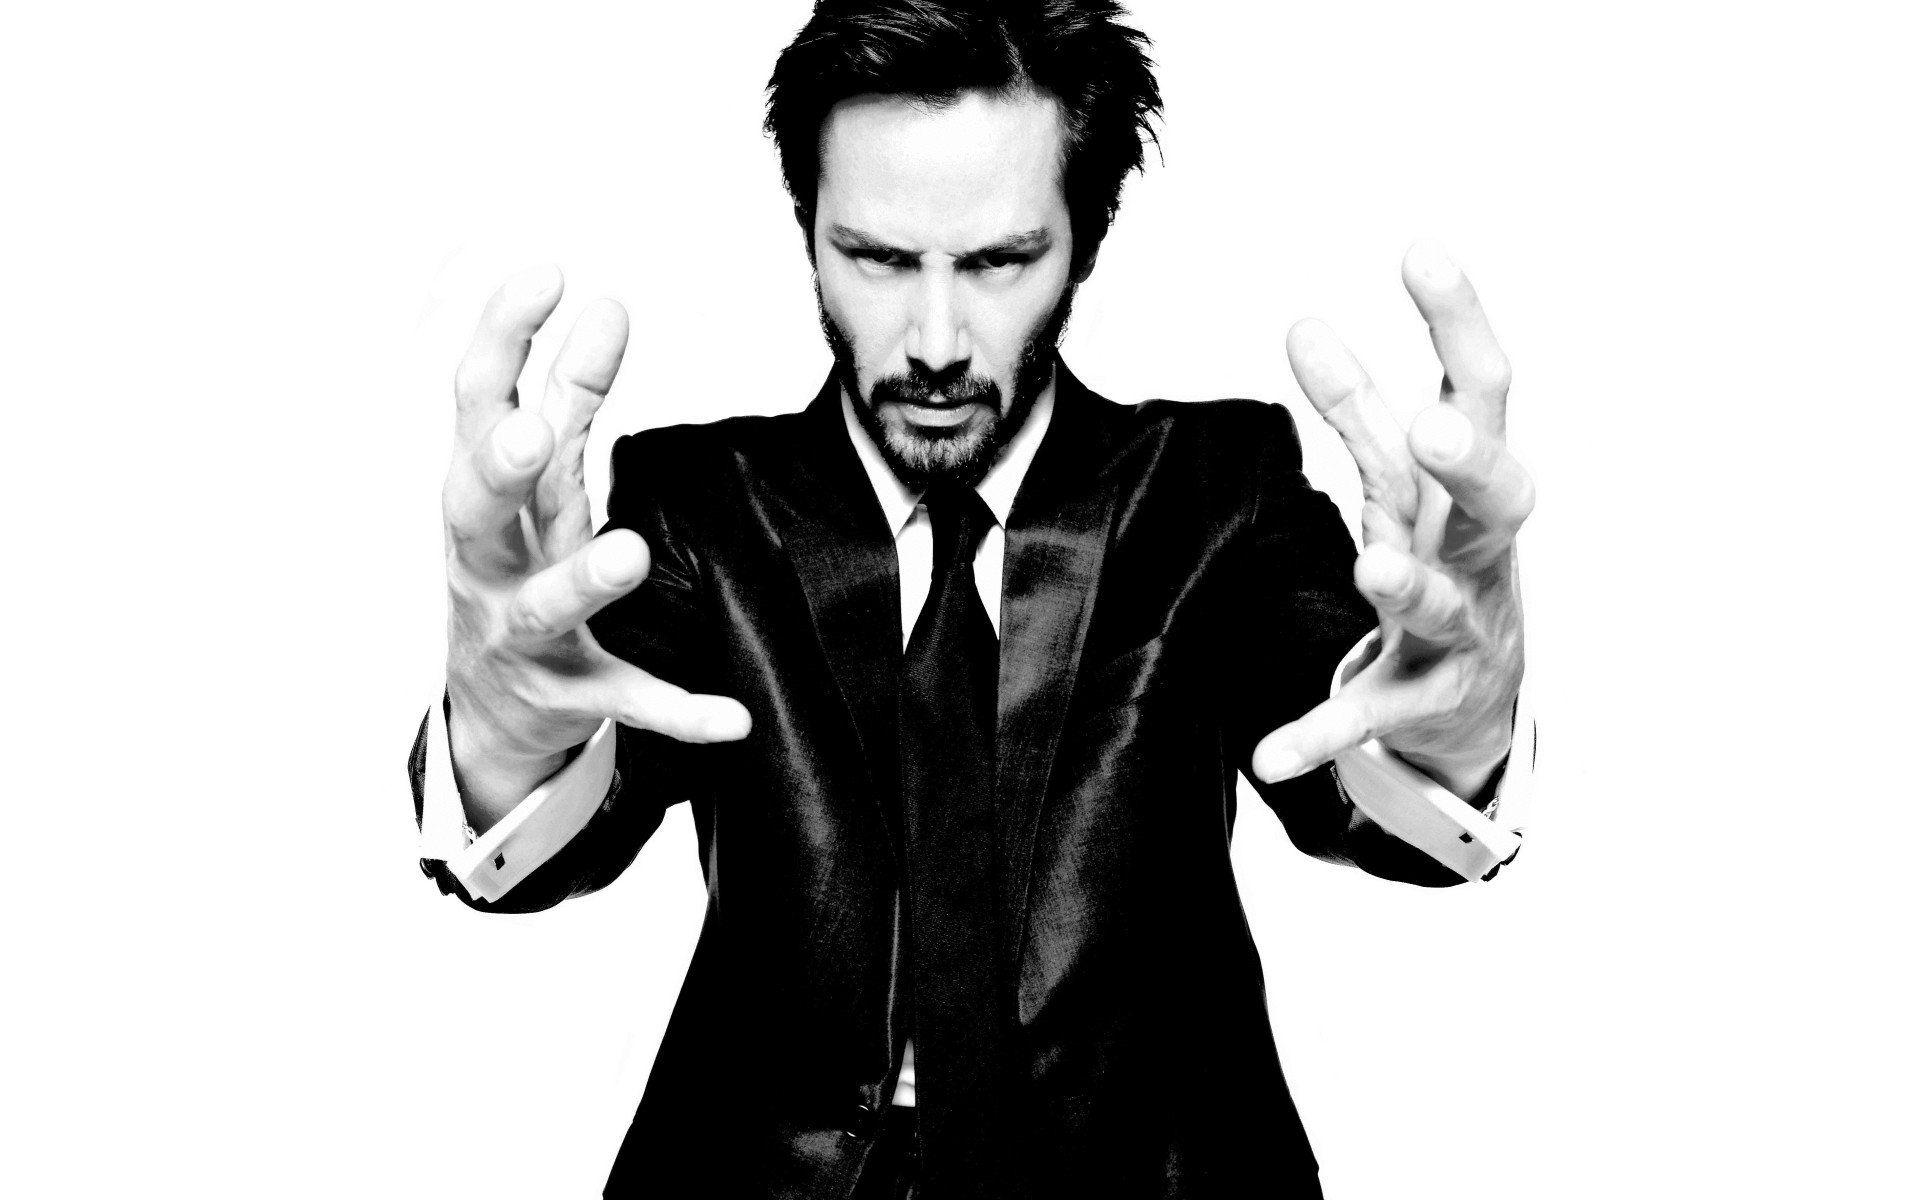 Black and white suit hands men celebrity Keanu Reeves beard actors